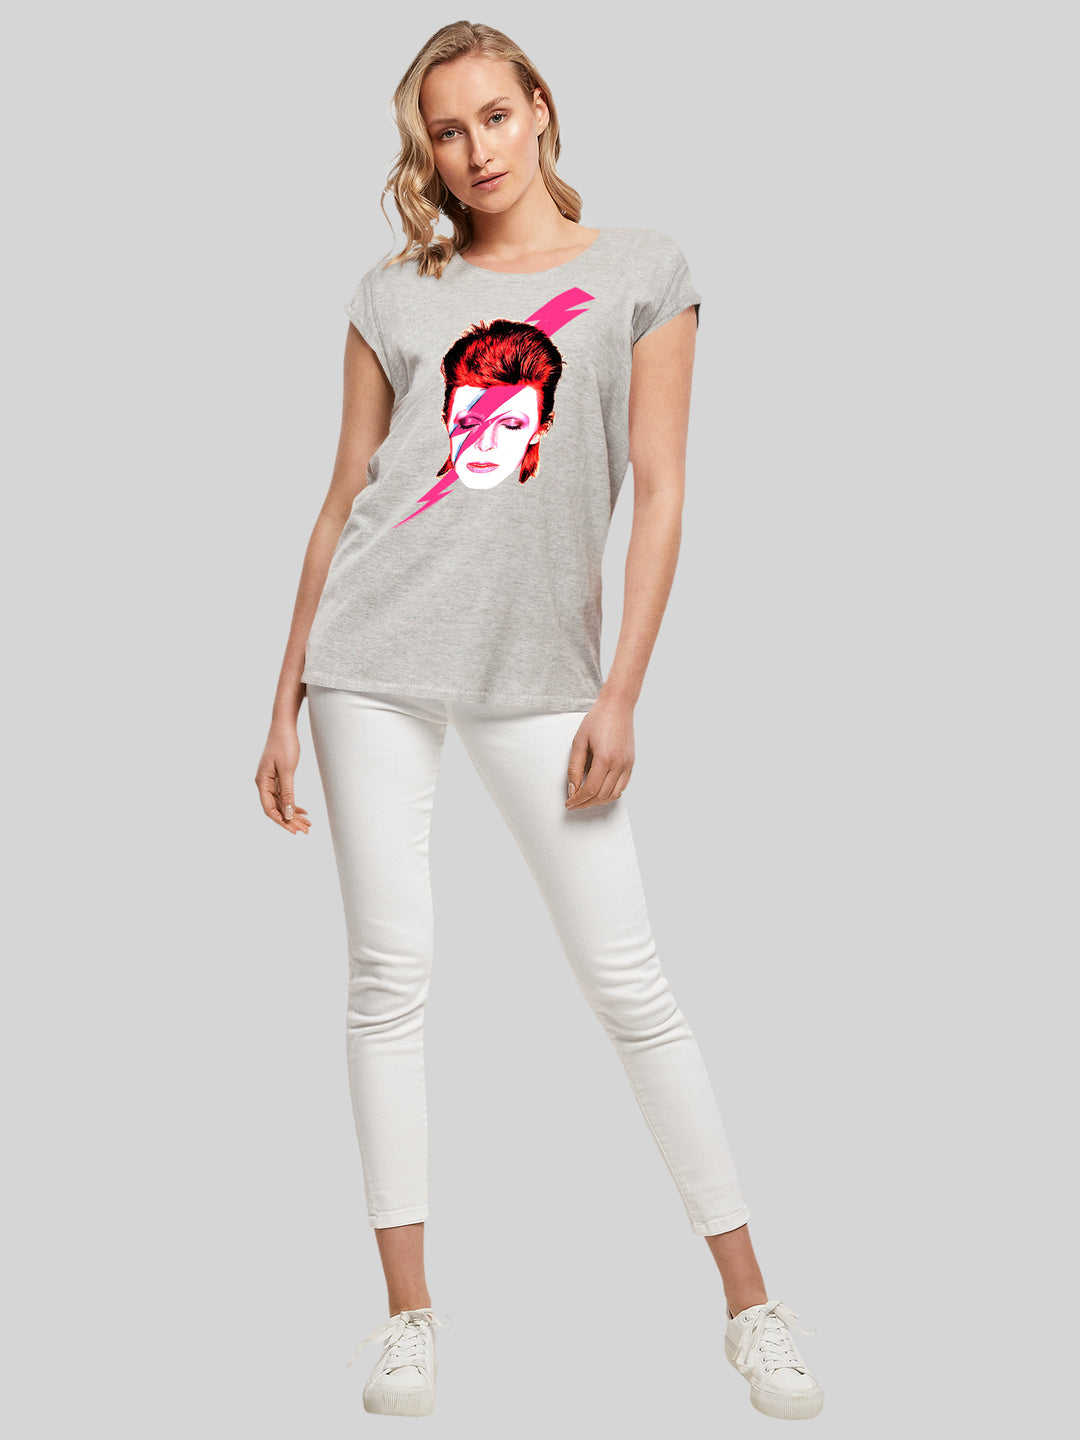 David Bowie T-Shirt | Aladdin Sane Lightning Bolt | Premium Short Sleeve Ladies Tee